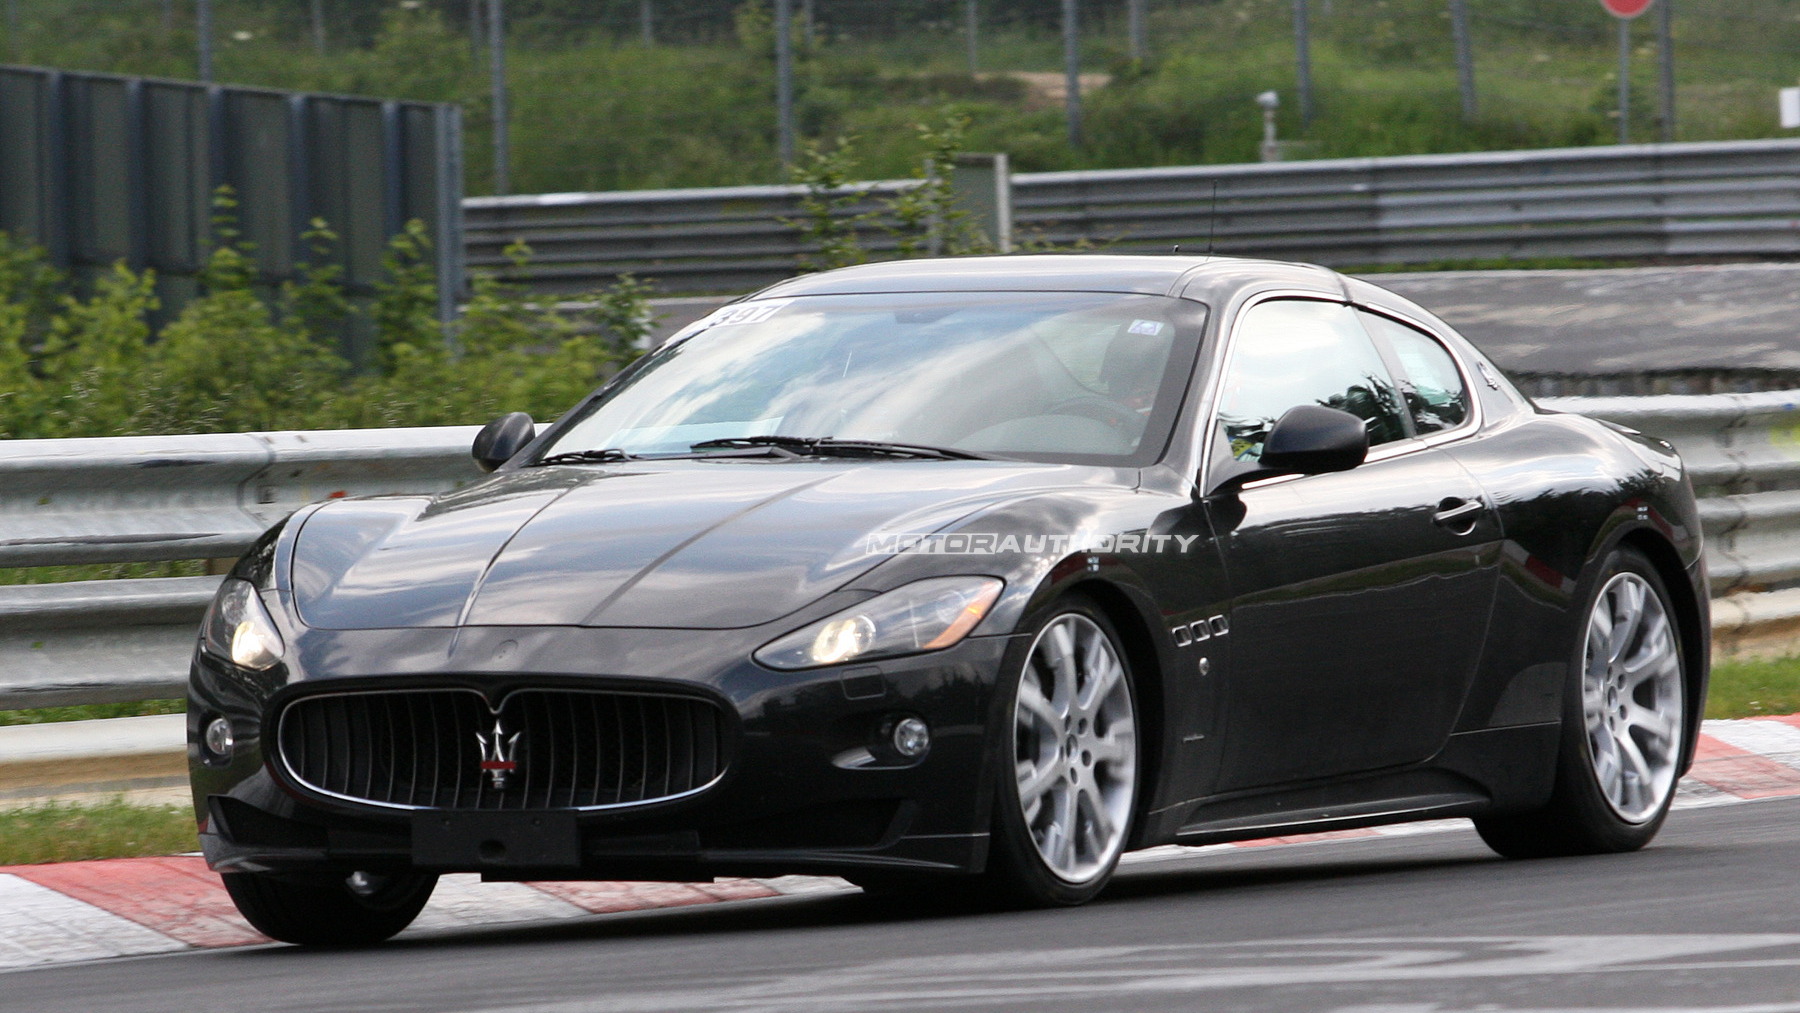 Maserati Gran Turismo mystery mule spy shots